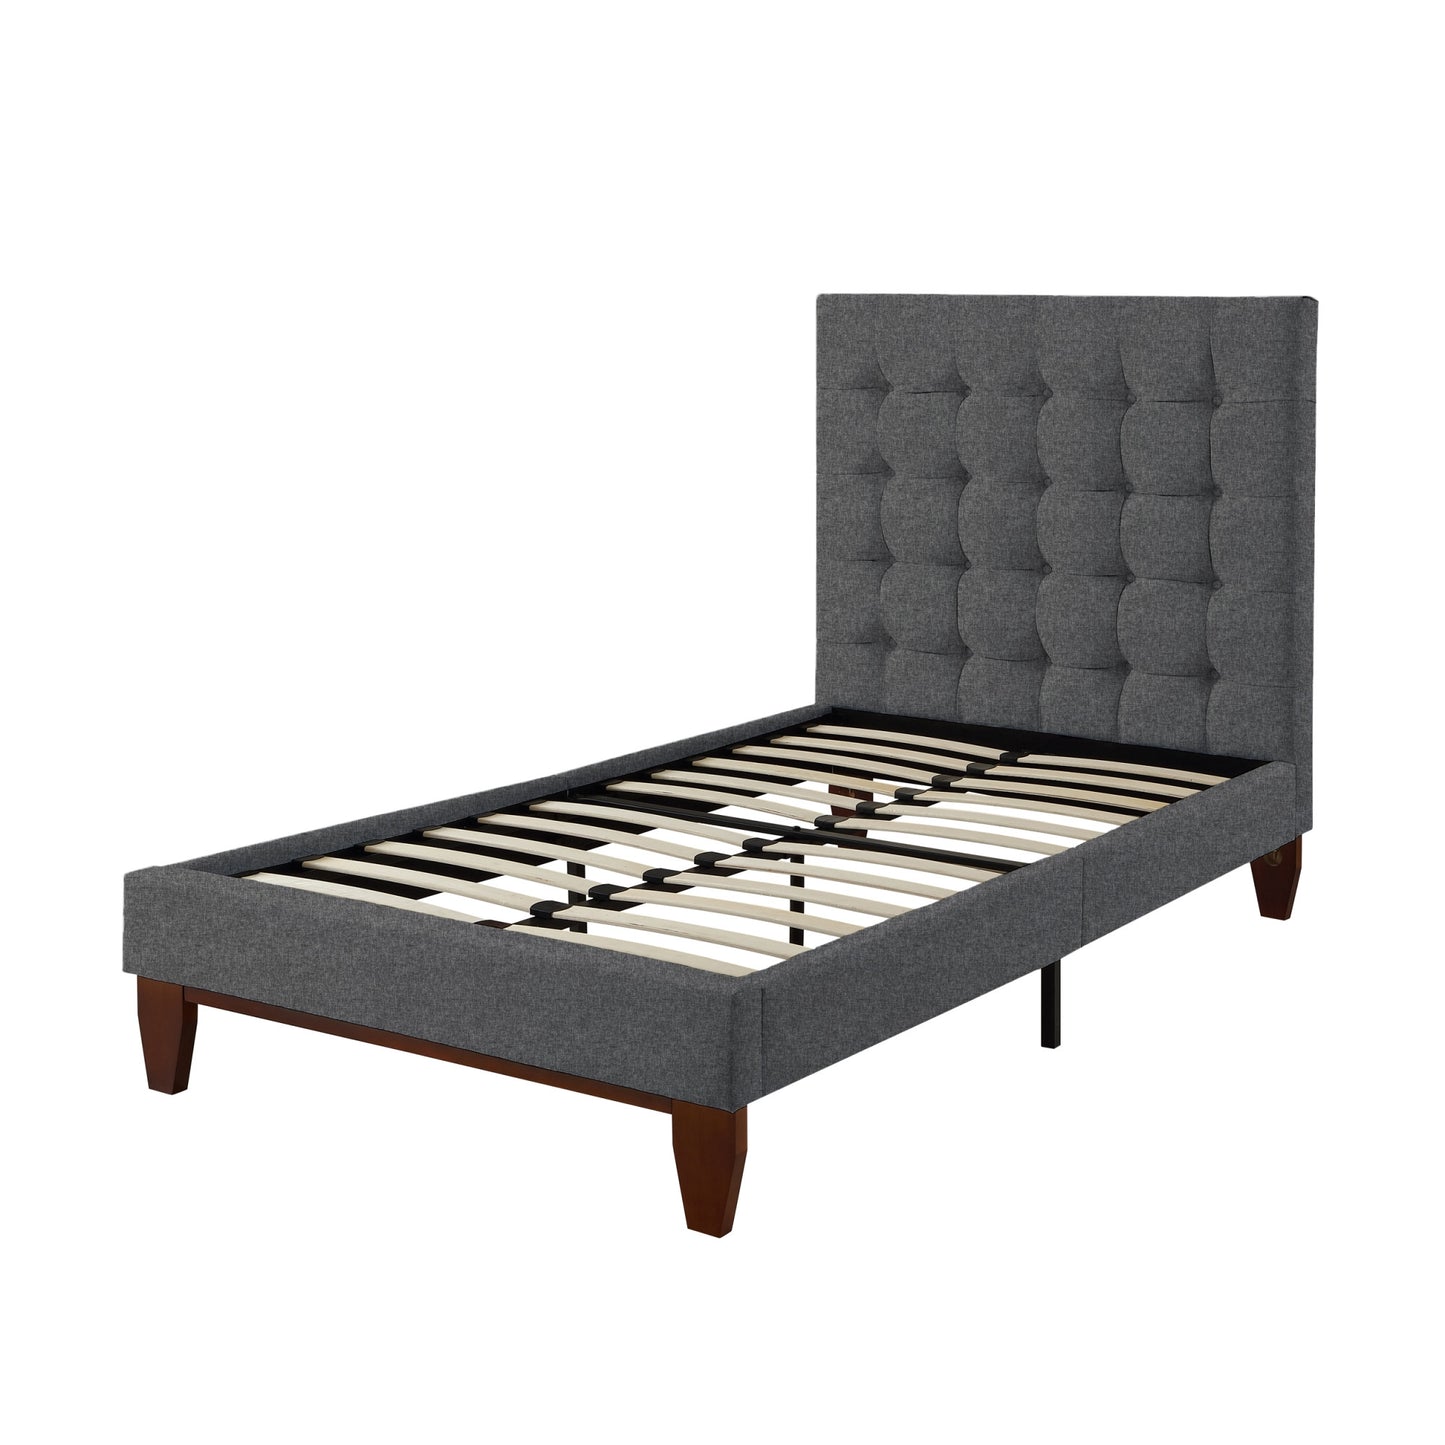 Light Gray Solid Wood Full Tufted Upholstered Linen Bed